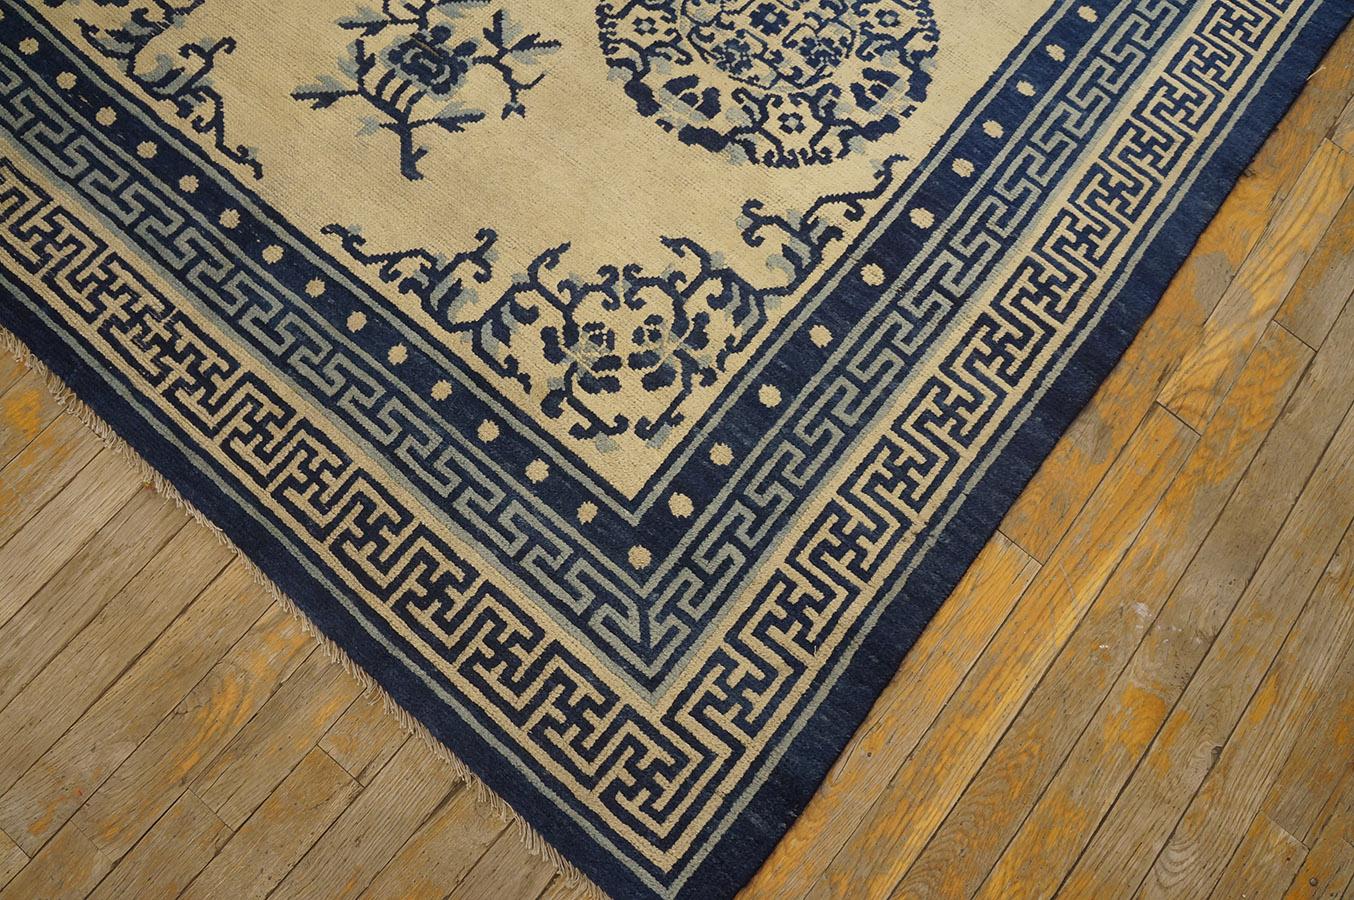 Mid 19th Century Chinese Ningxia Carpet ( 5'2